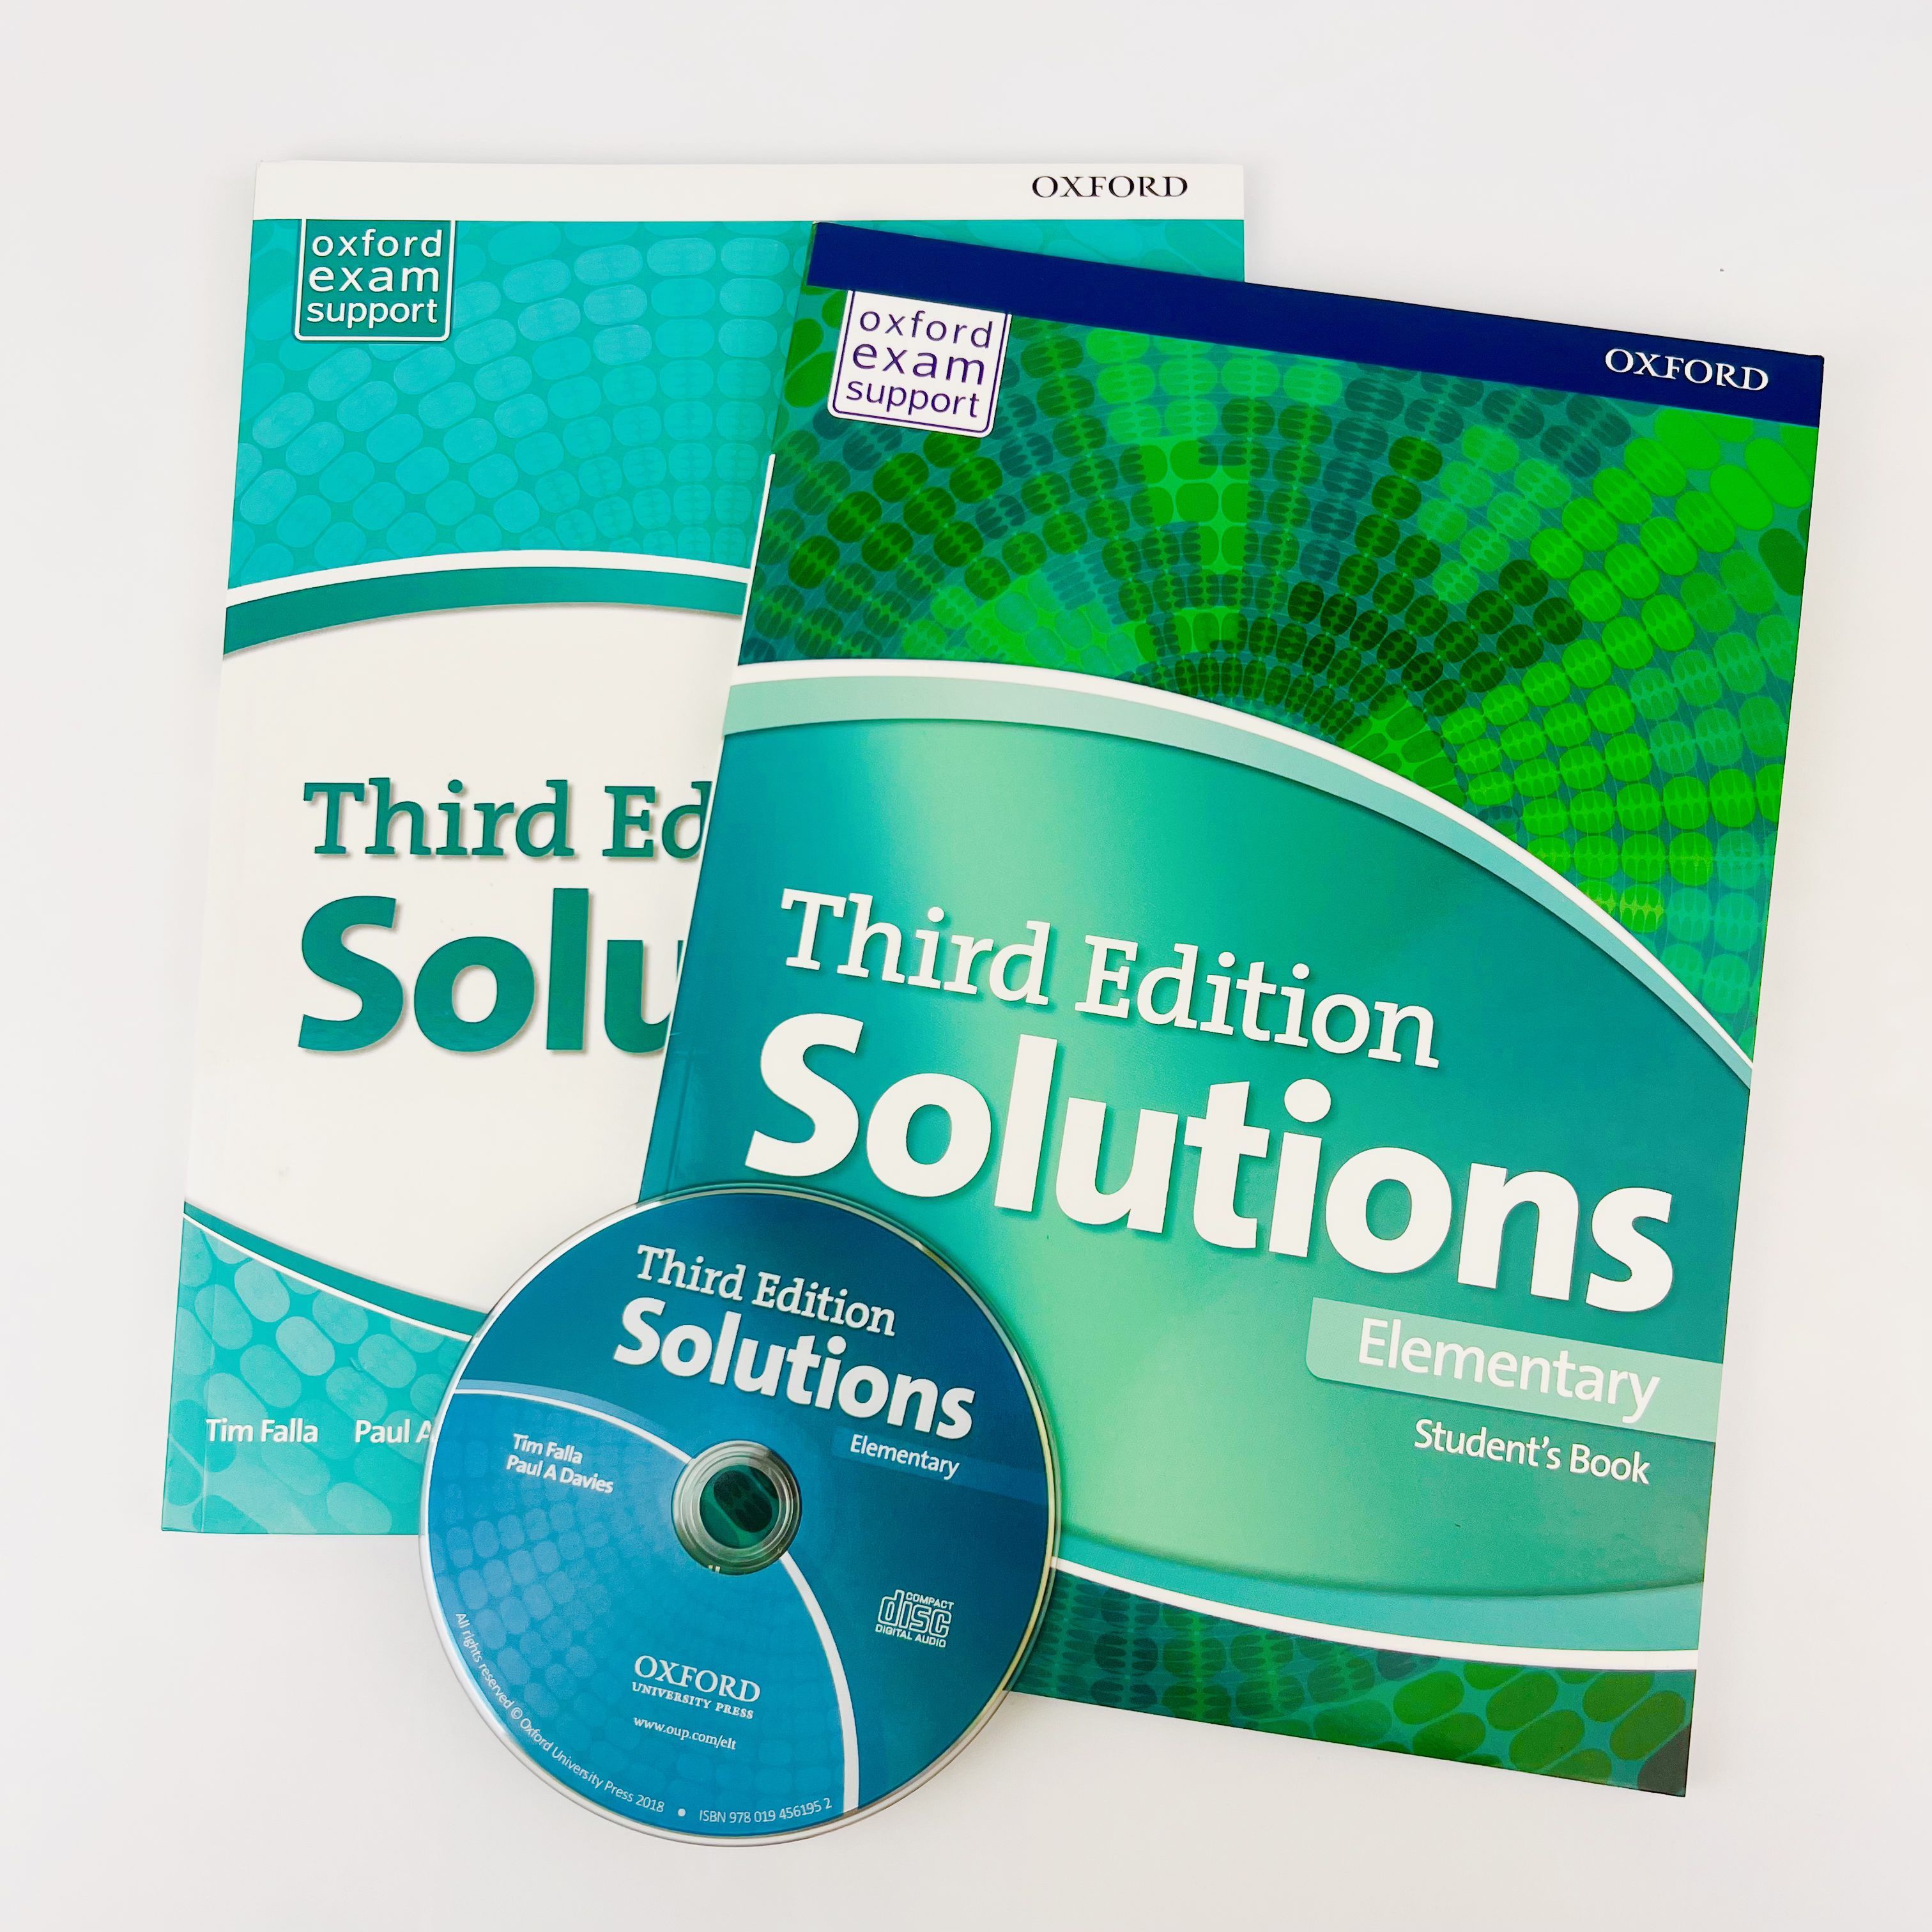 Solutions elementary pdf. Солюшнс элементари. Учебник solutions Elementary. Third Edition solutions Elementary. Учебник Солюшенс элементари.